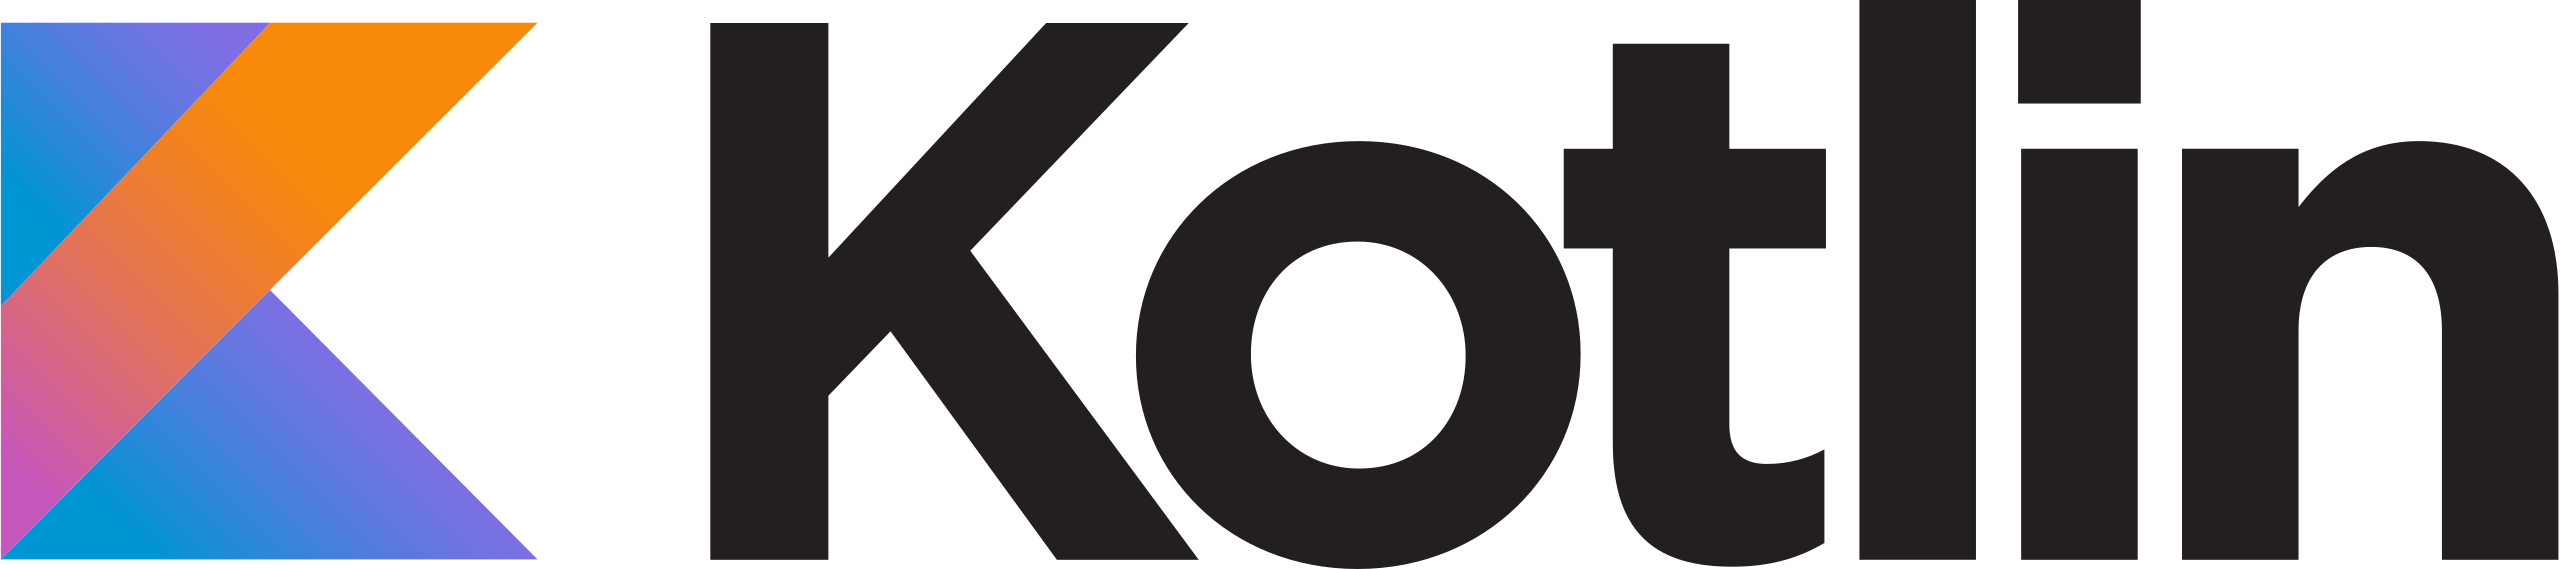 Kotlin - Native Android development